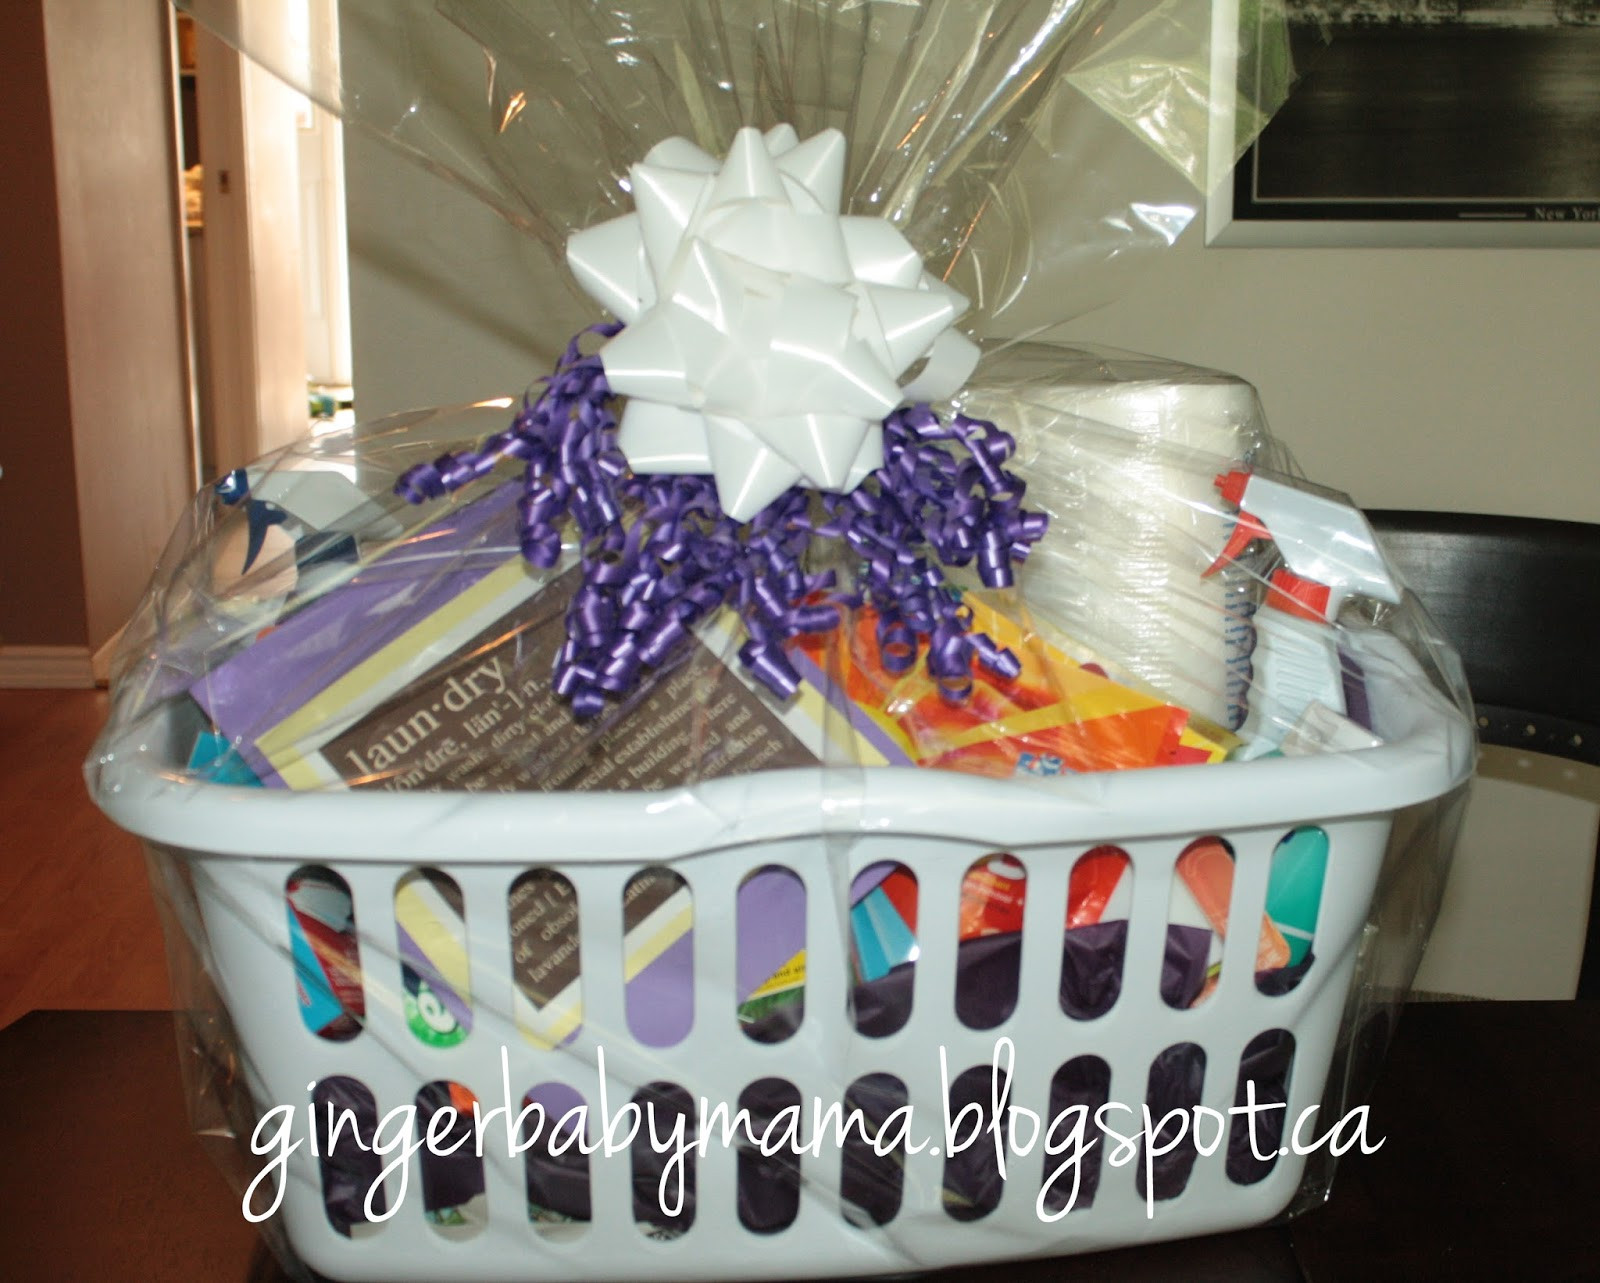 Wedding Shower Gift Ideas
 GingerBabyMama Fun Practical Bridal Shower Gift